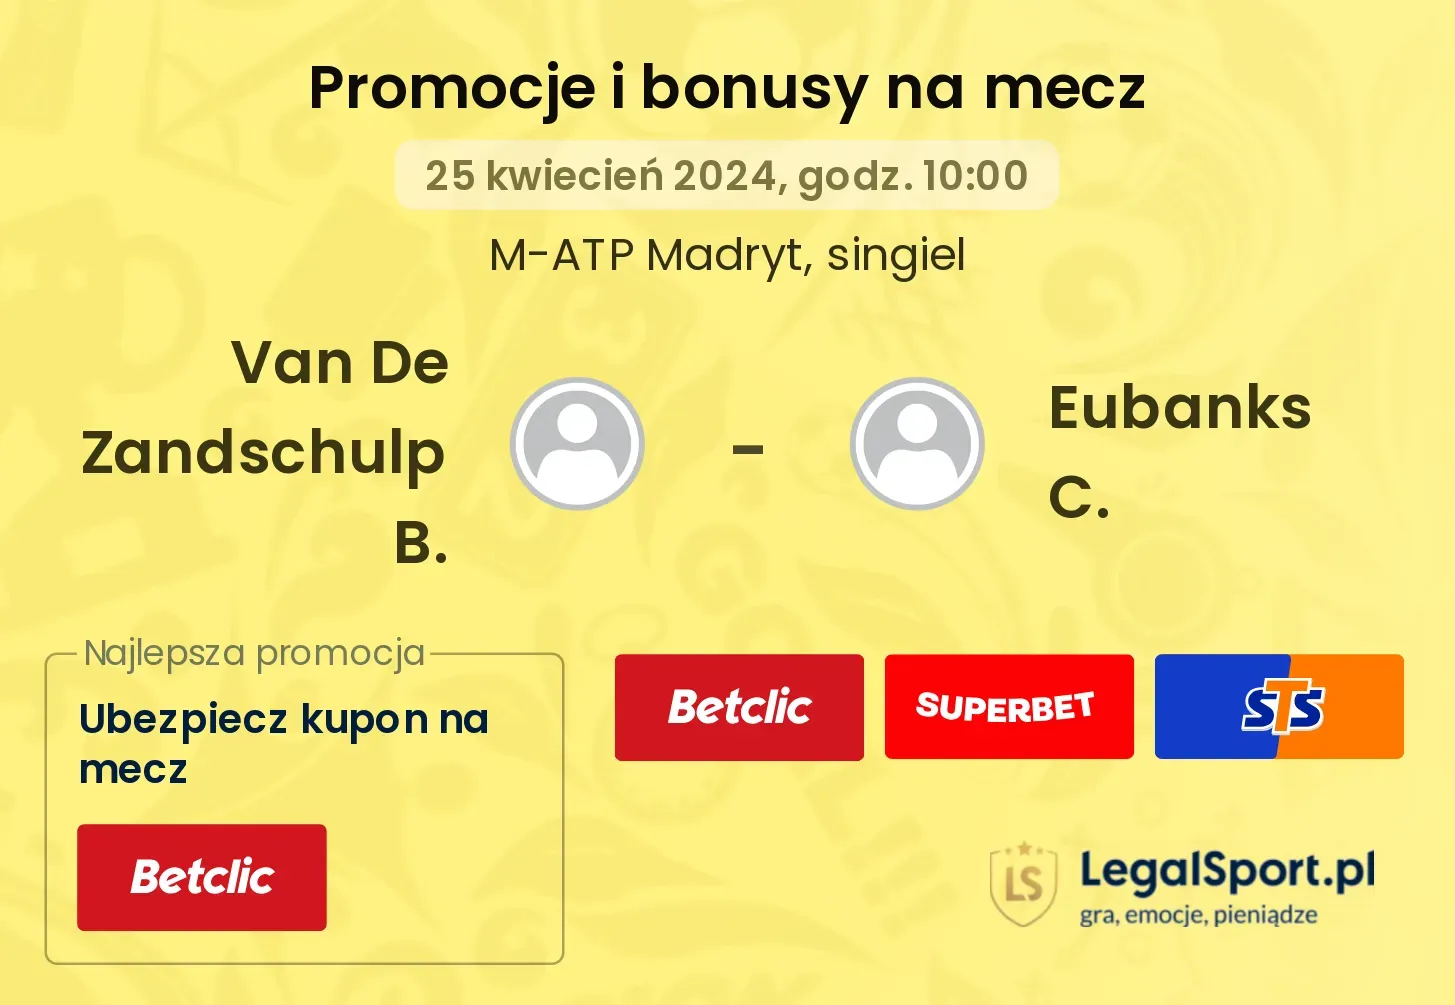 Van De Zandschulp B. - Eubanks C. promocje bonusy na mecz